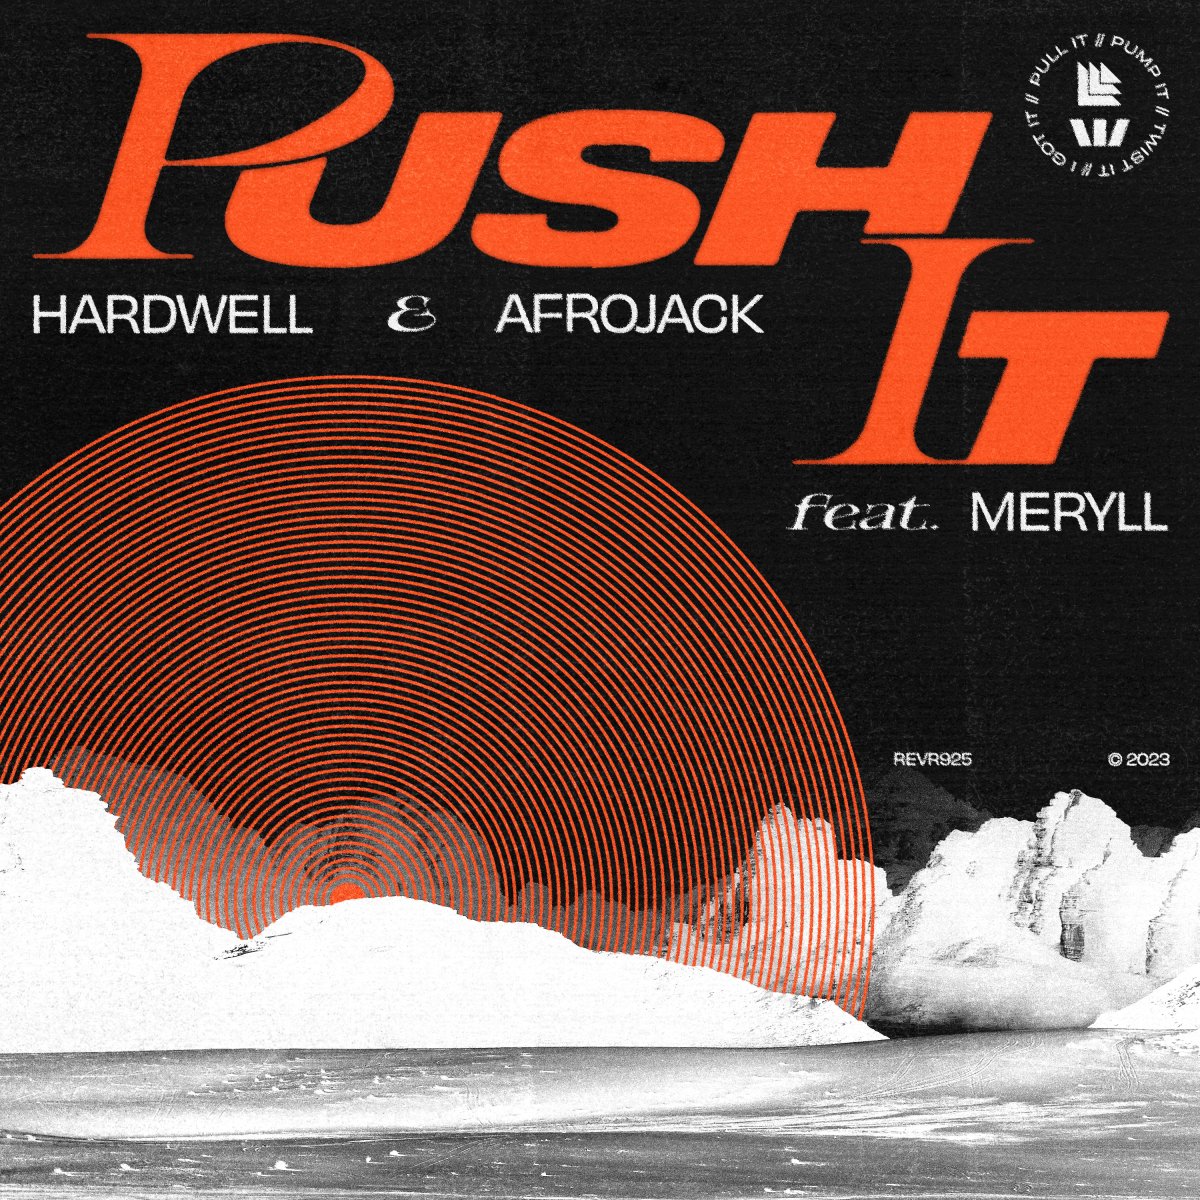 Push It - Hardwell⁠ & Afrojack⁠ feat. Meryll⁠ 